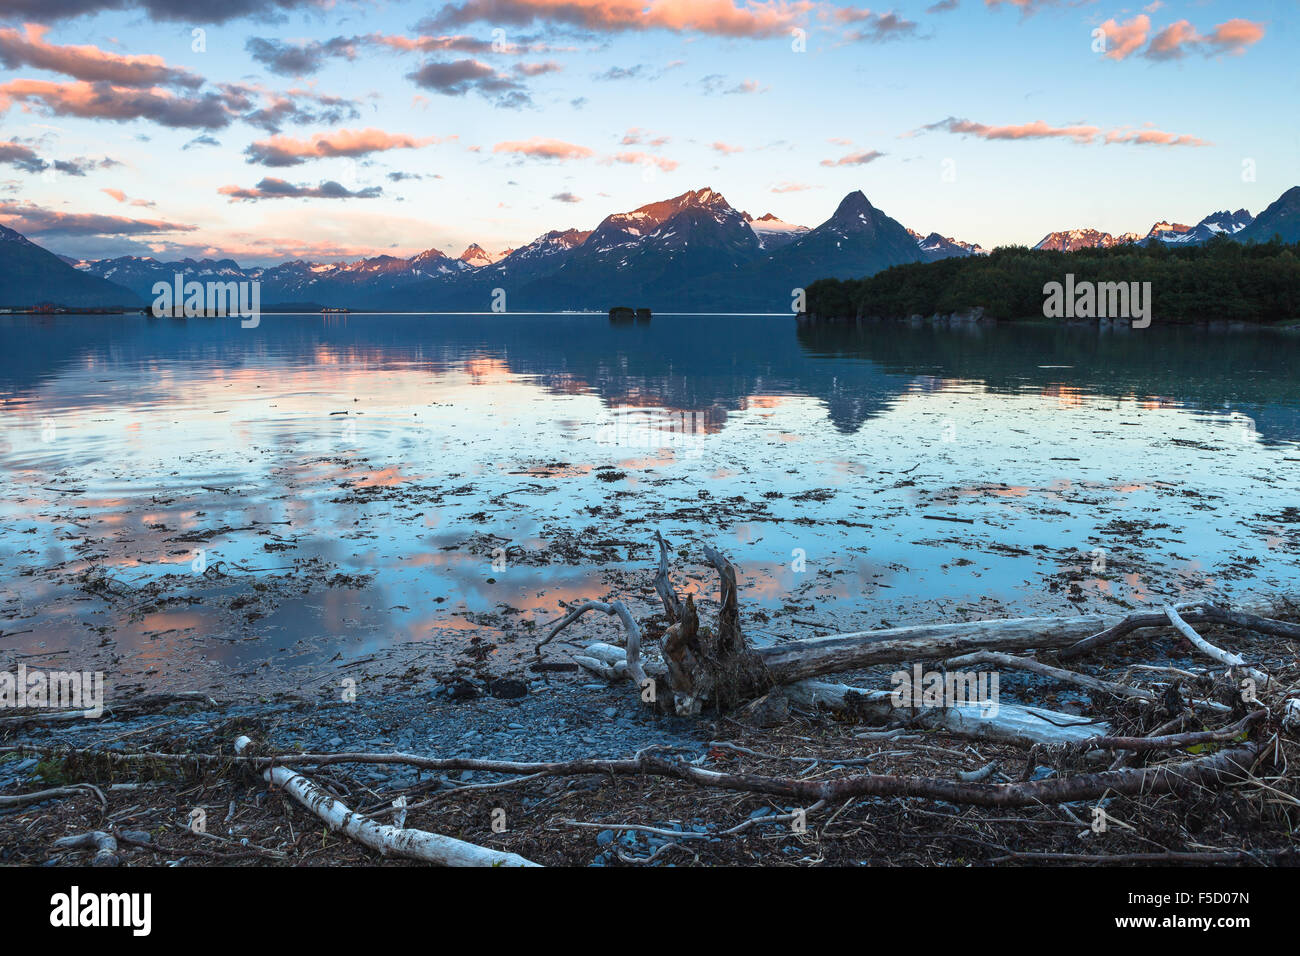 Prince William Sound at sunset from Valdez coastline, Alaska, United States of America Stock Photo